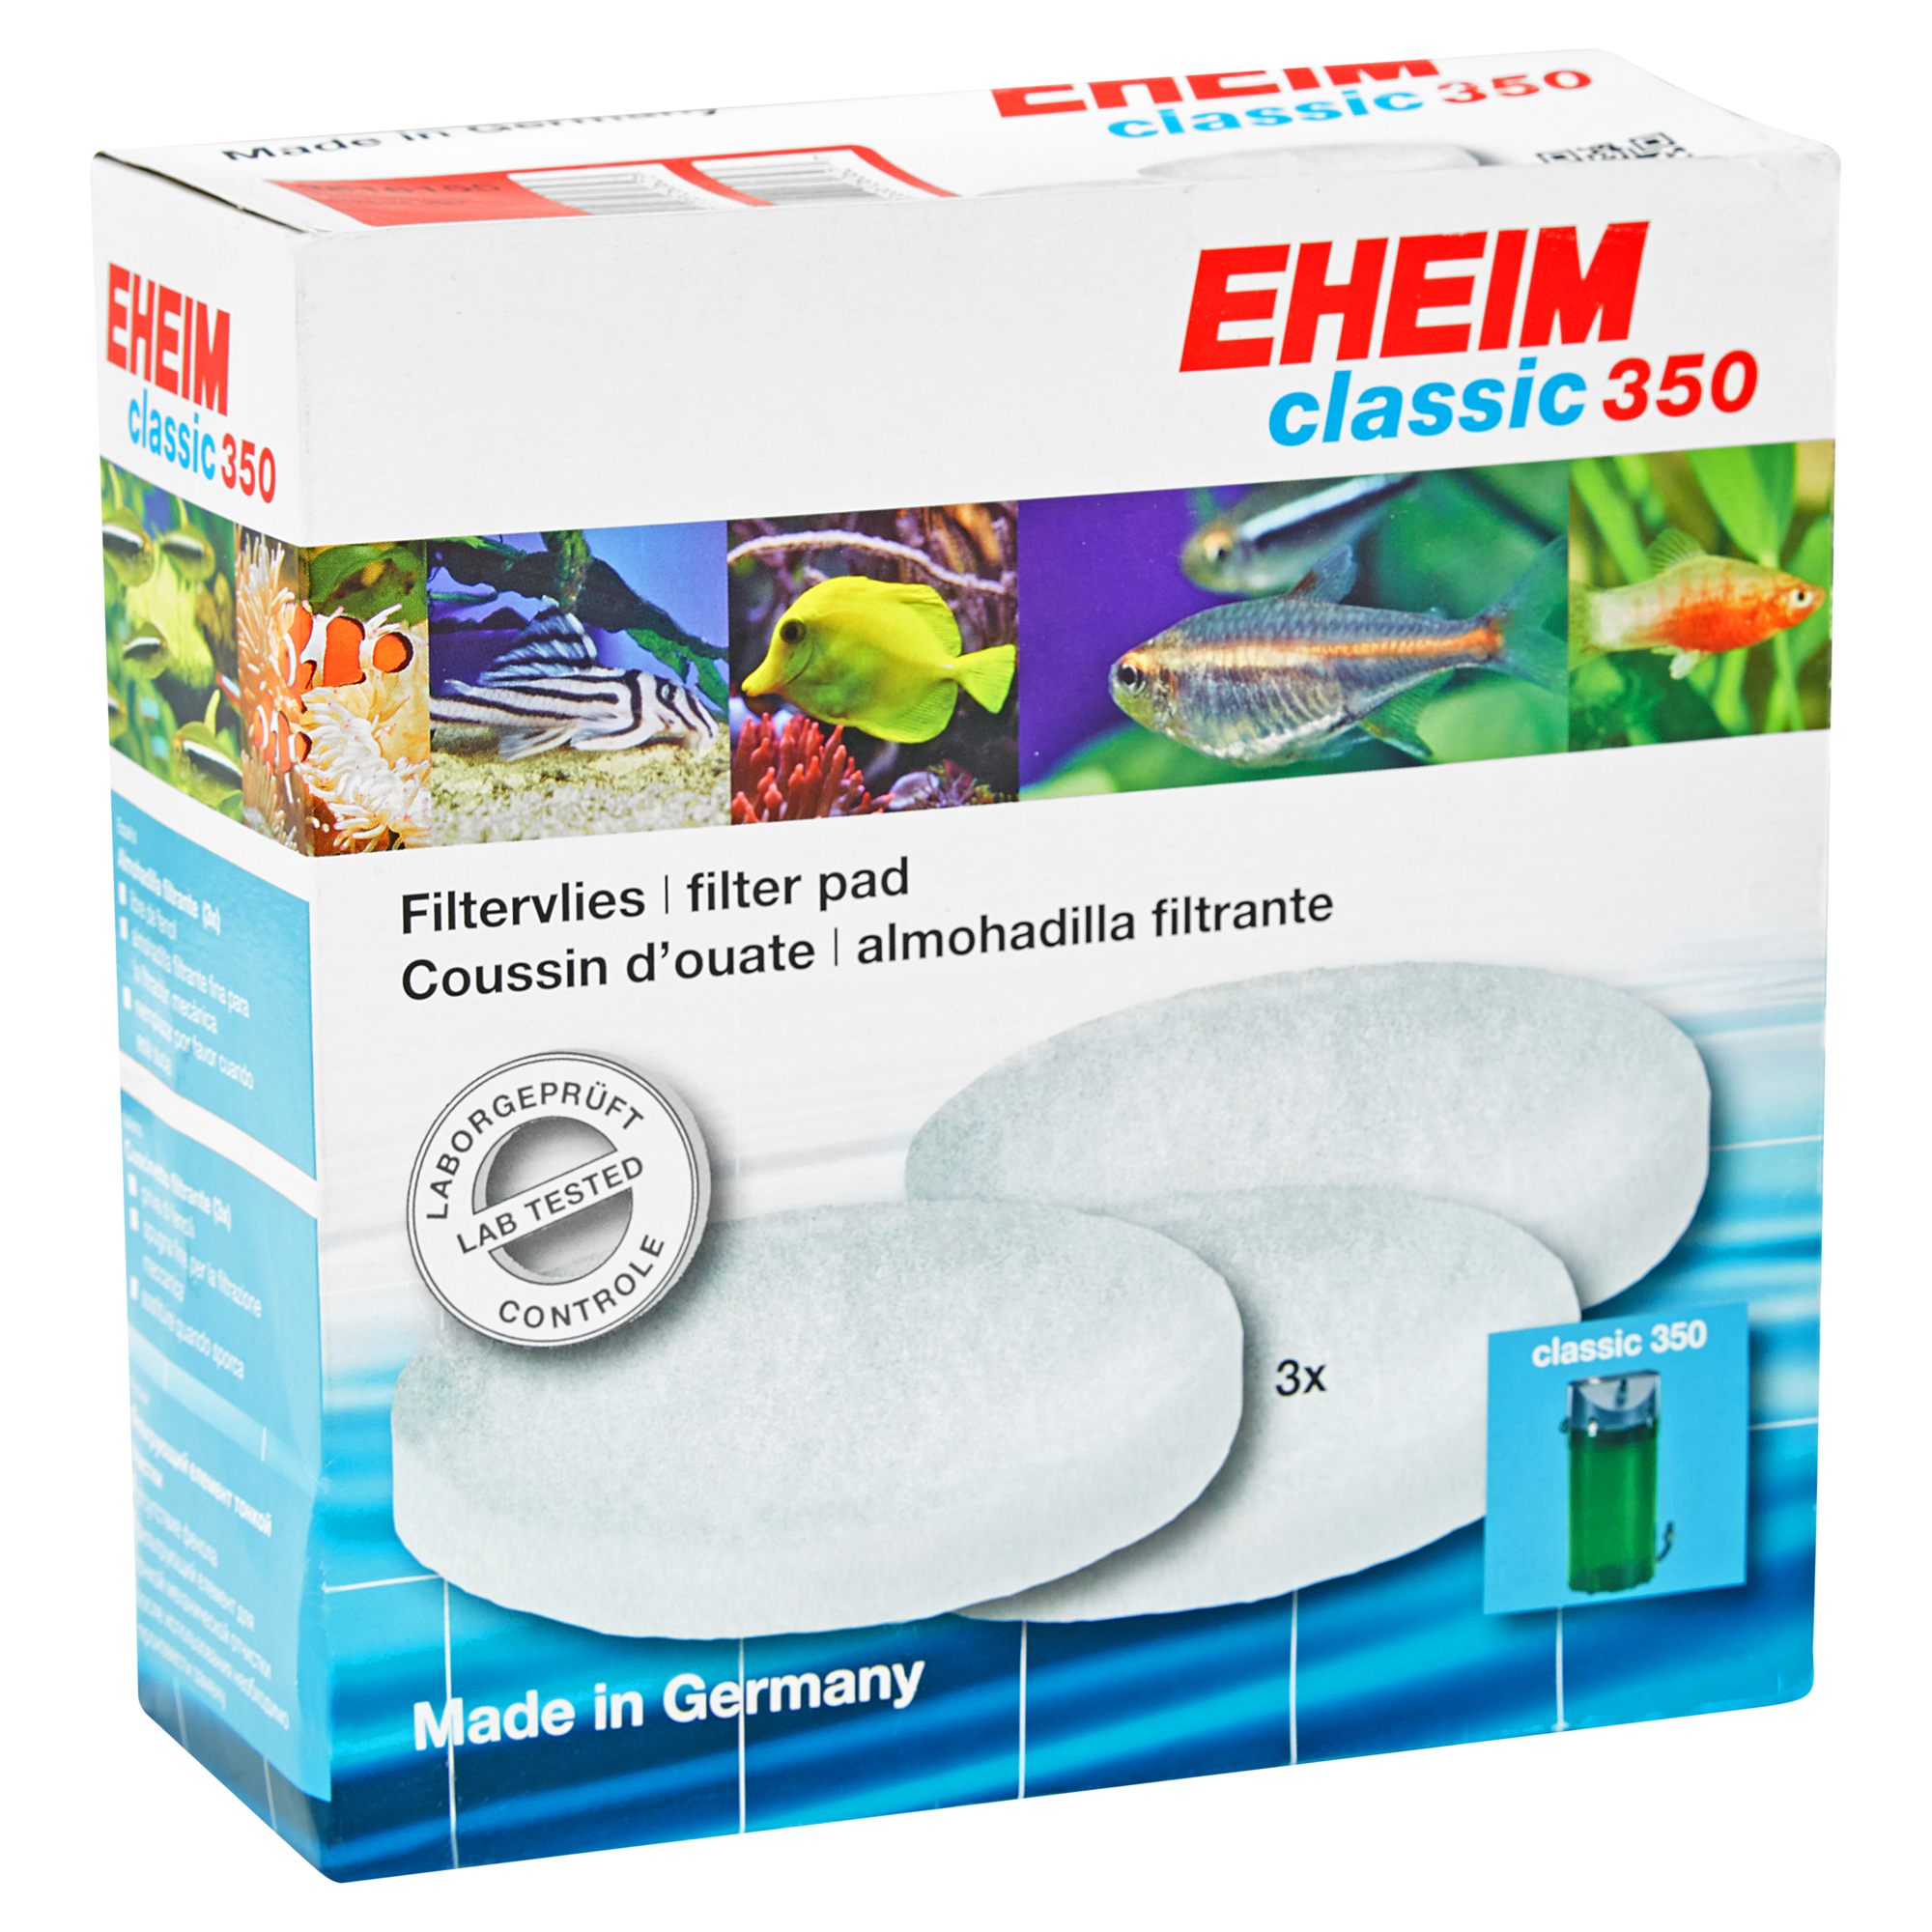 Filtervlies für Aquarienfilter "Classic 350" 3 Stück + product picture